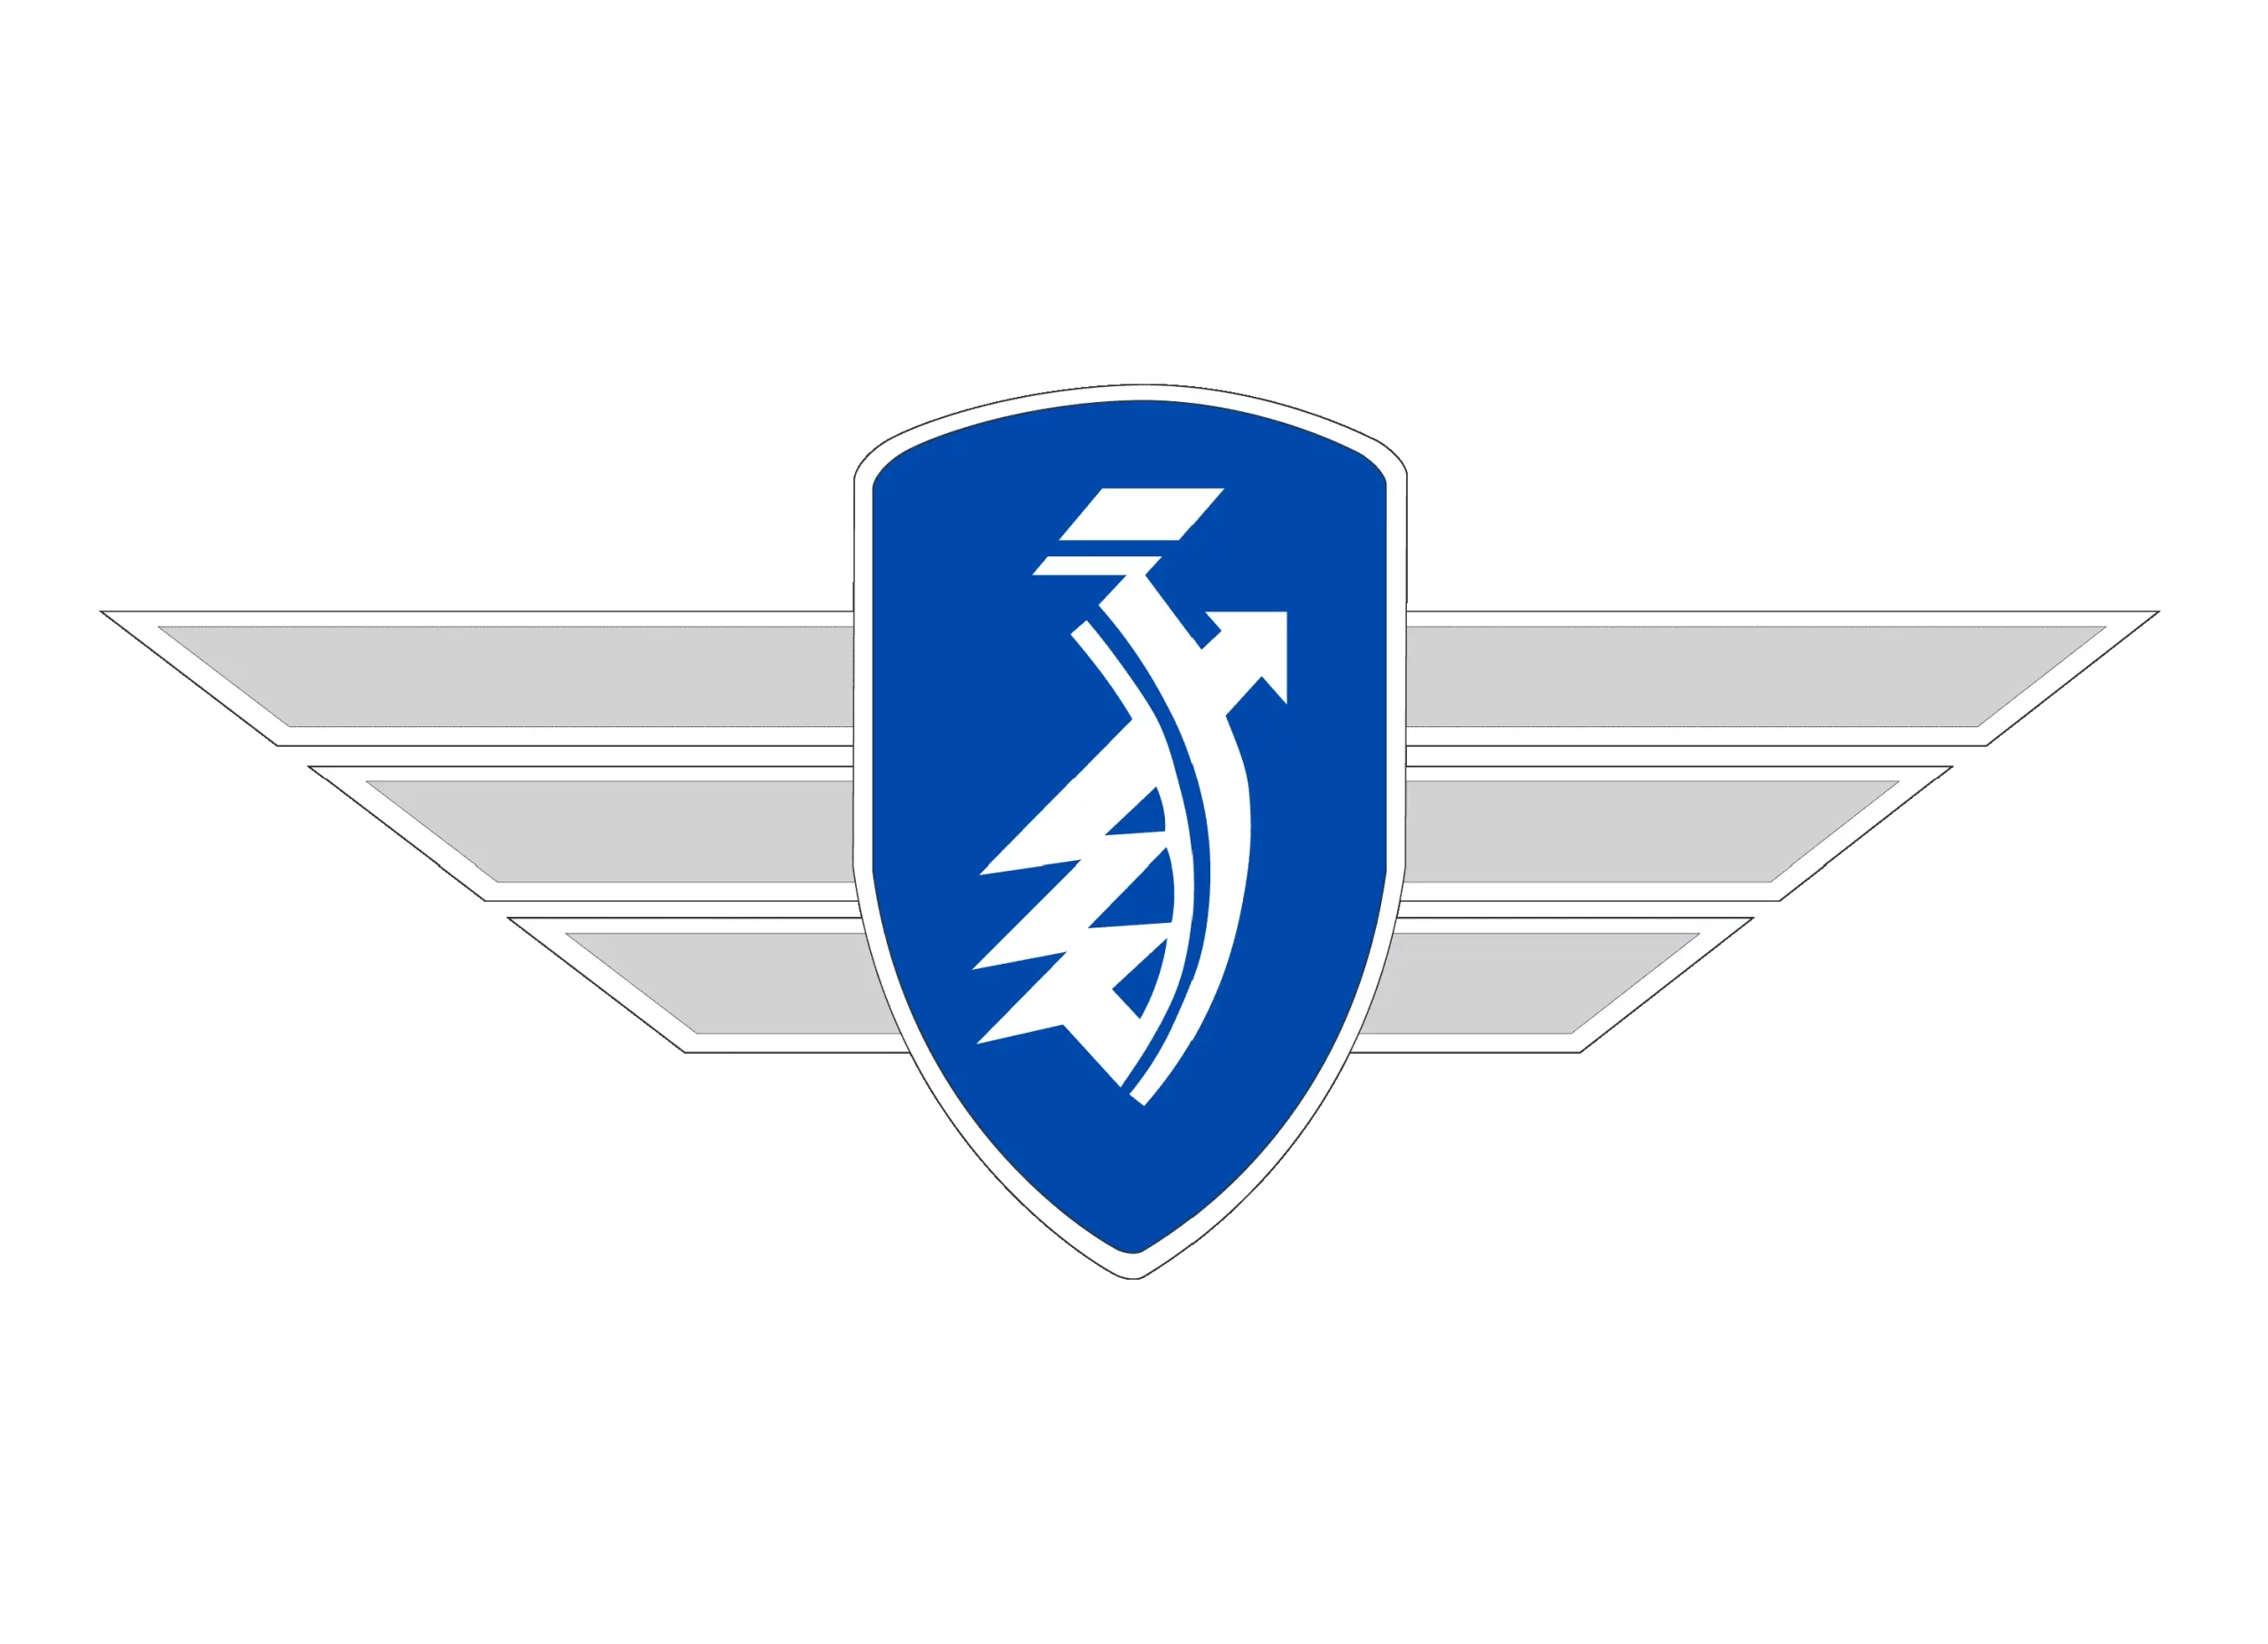 Zundapp logo 1917-1984